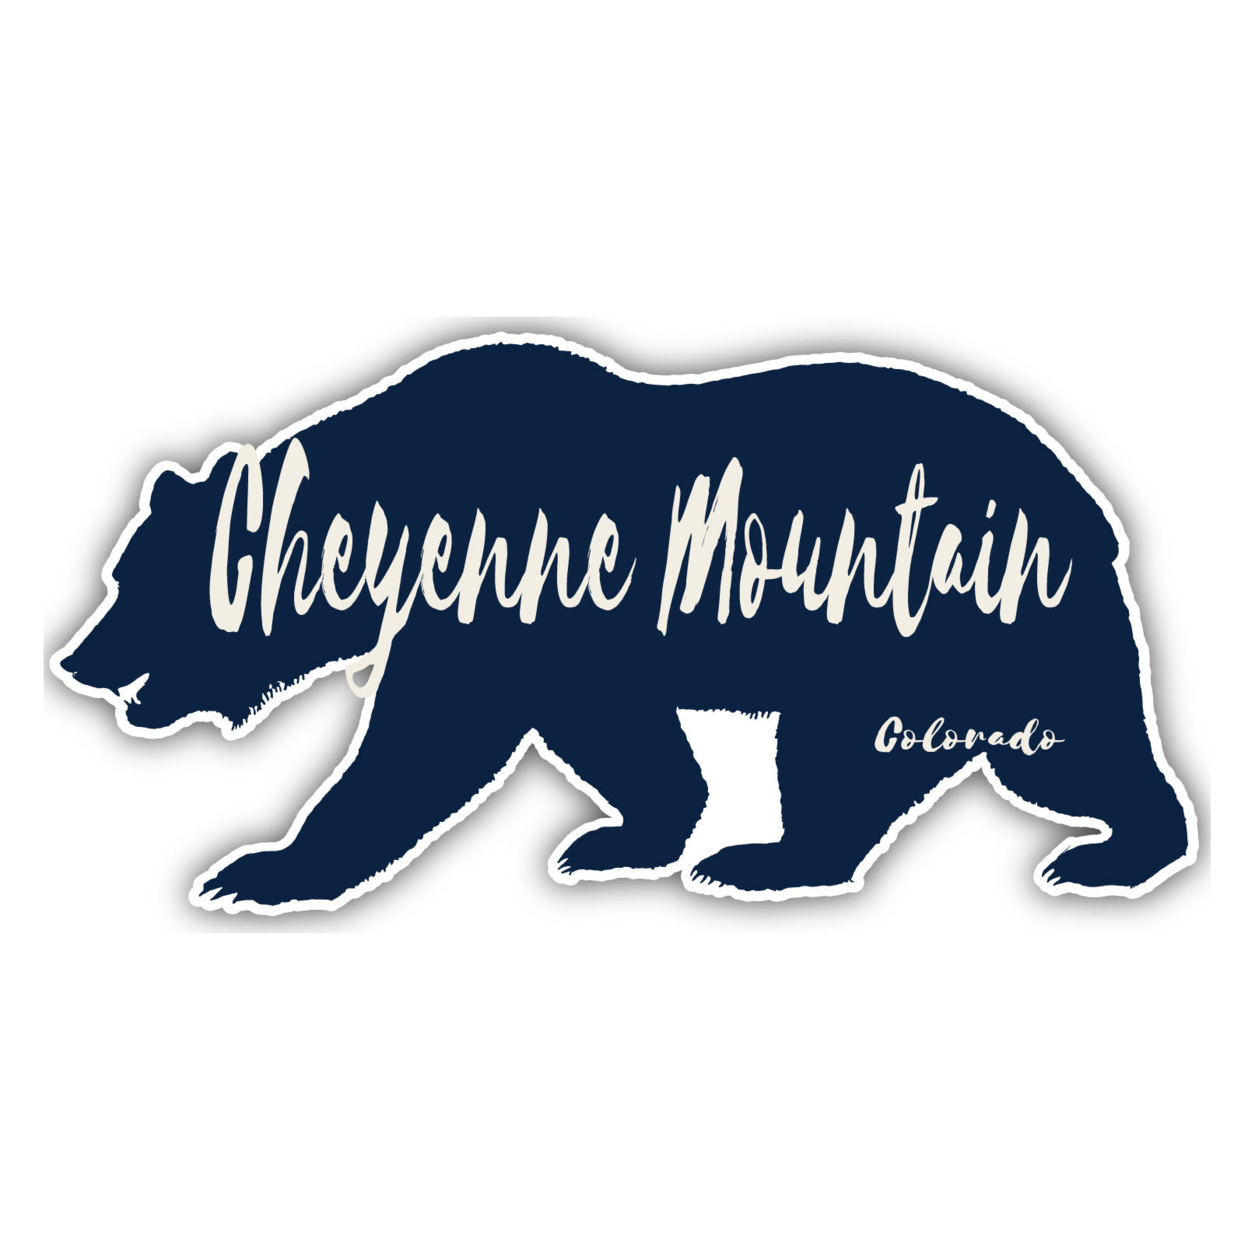 Cheyenne Mountain Colorado Souvenir Decorative Stickers (Choose Theme And Size) - Single Unit, 12-Inch, Tent